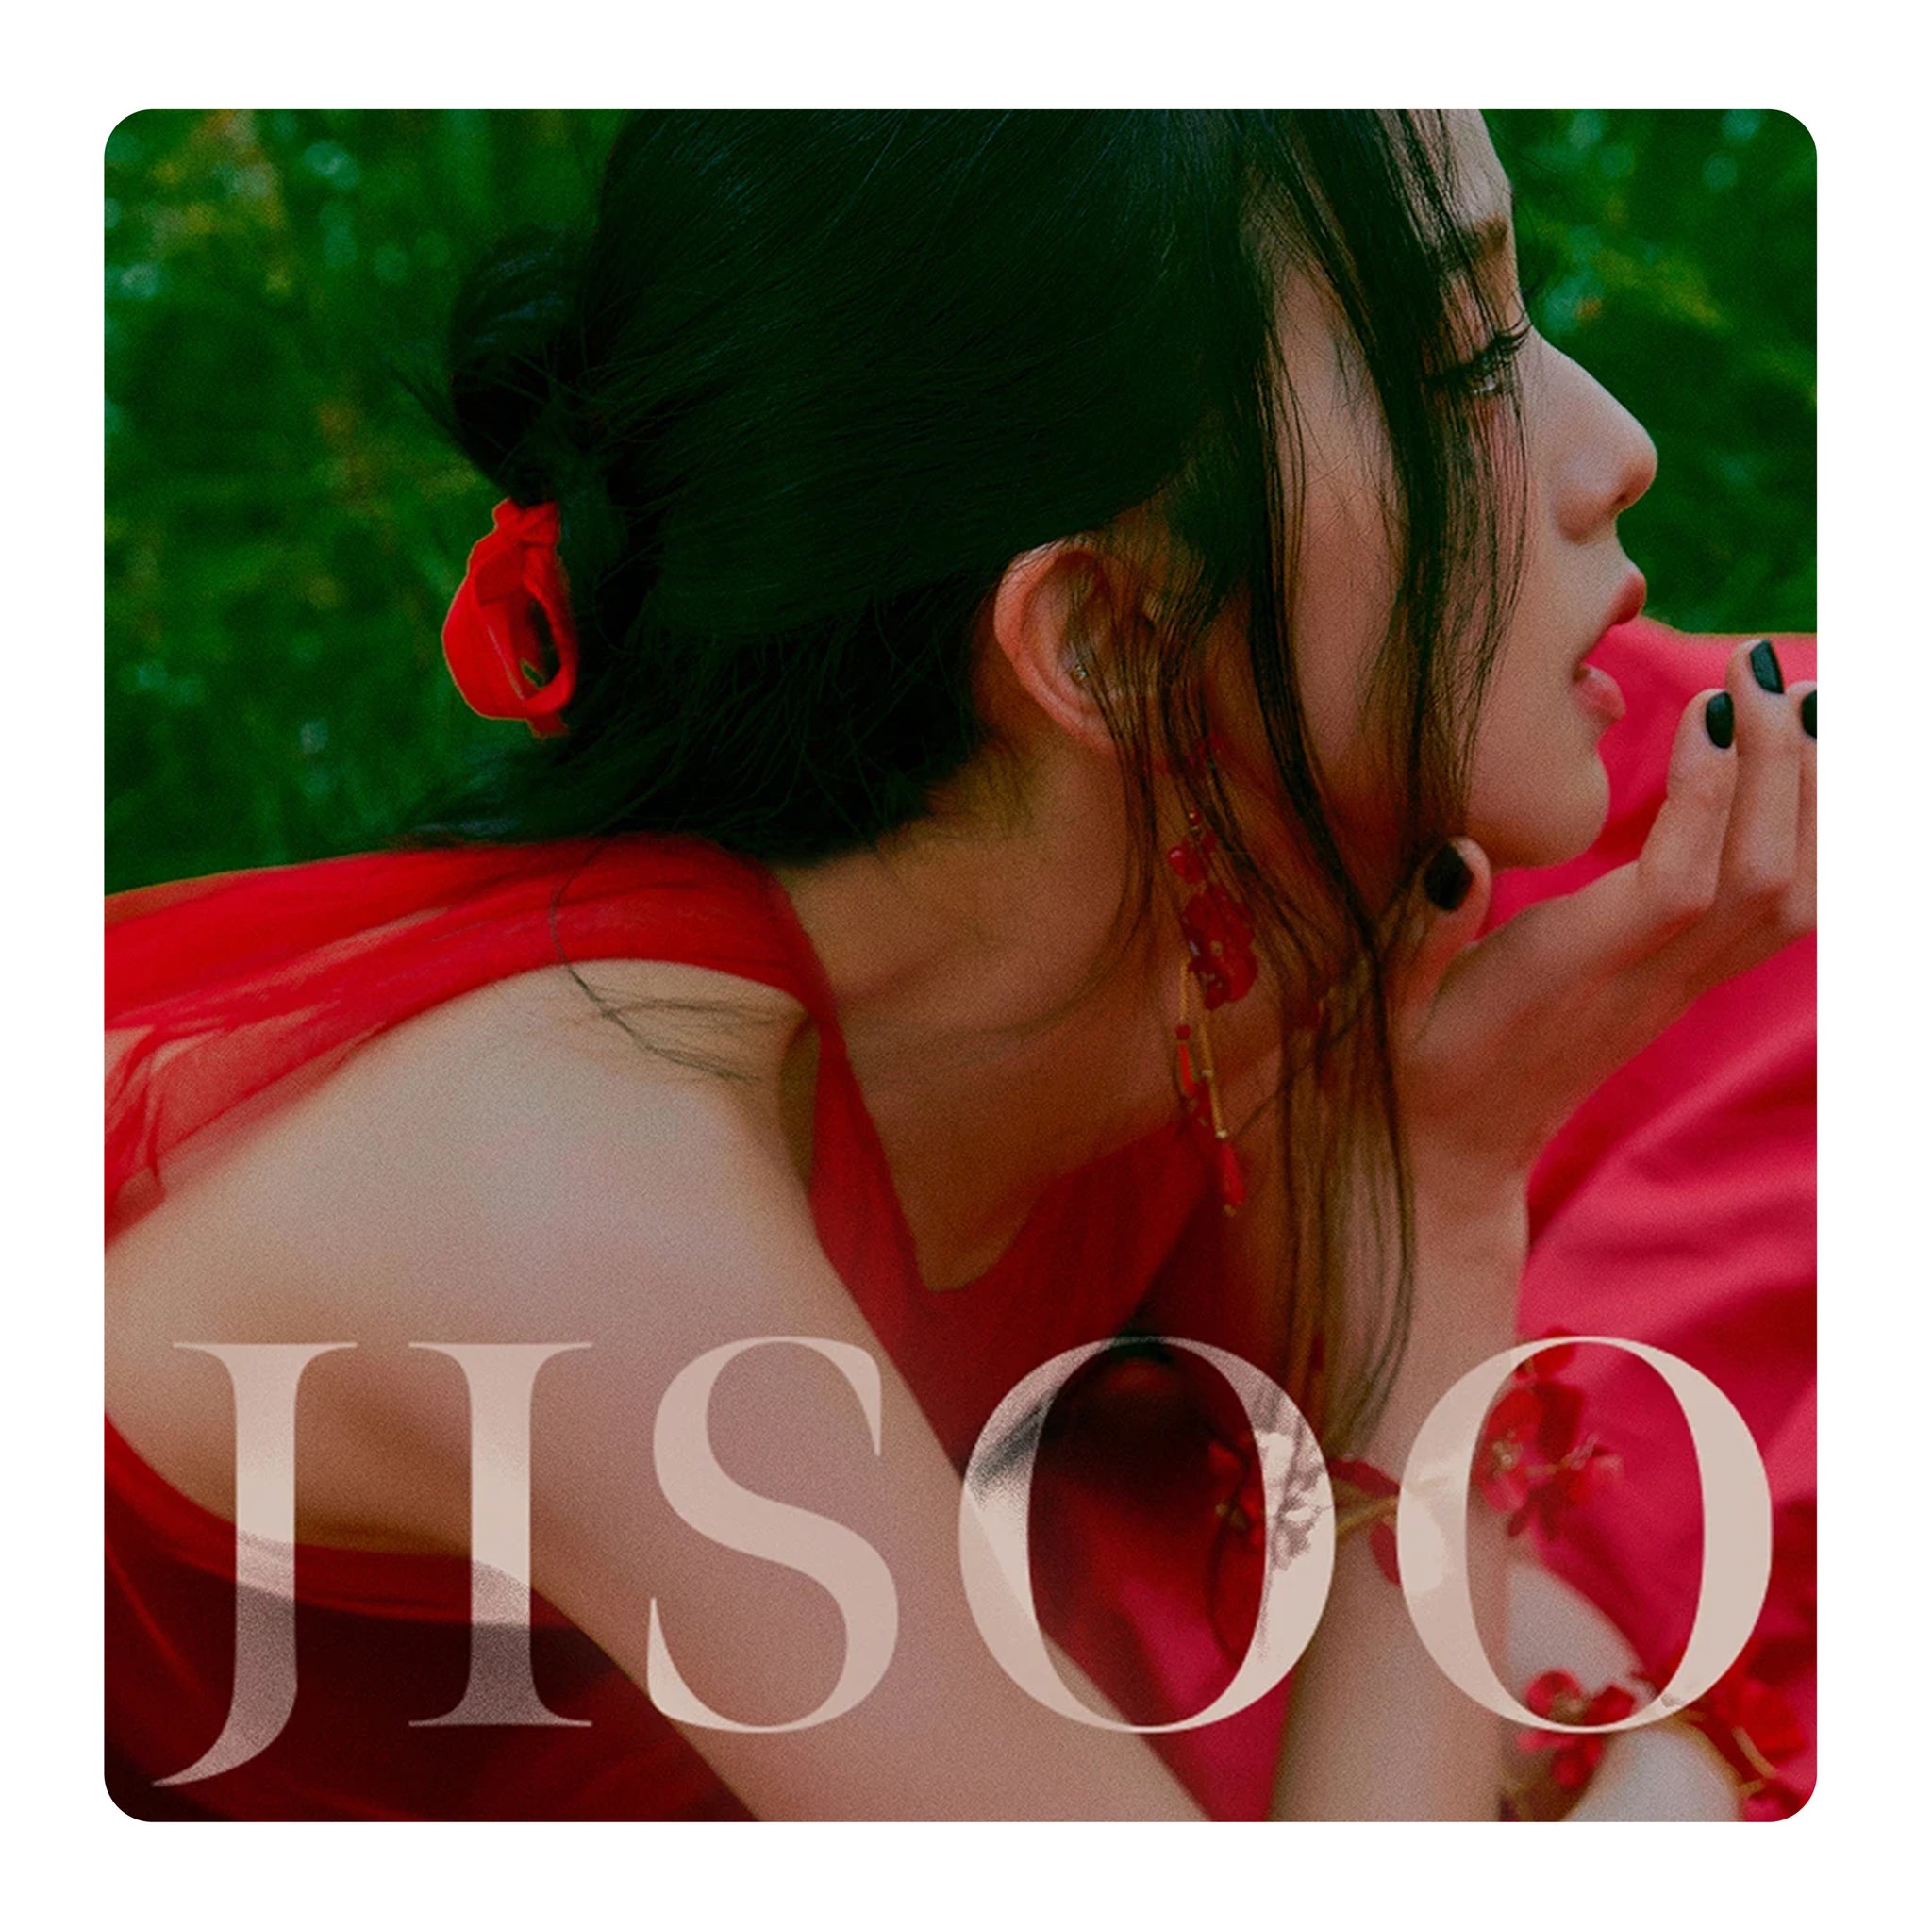 Blackpink: Jisoo - First Single Album